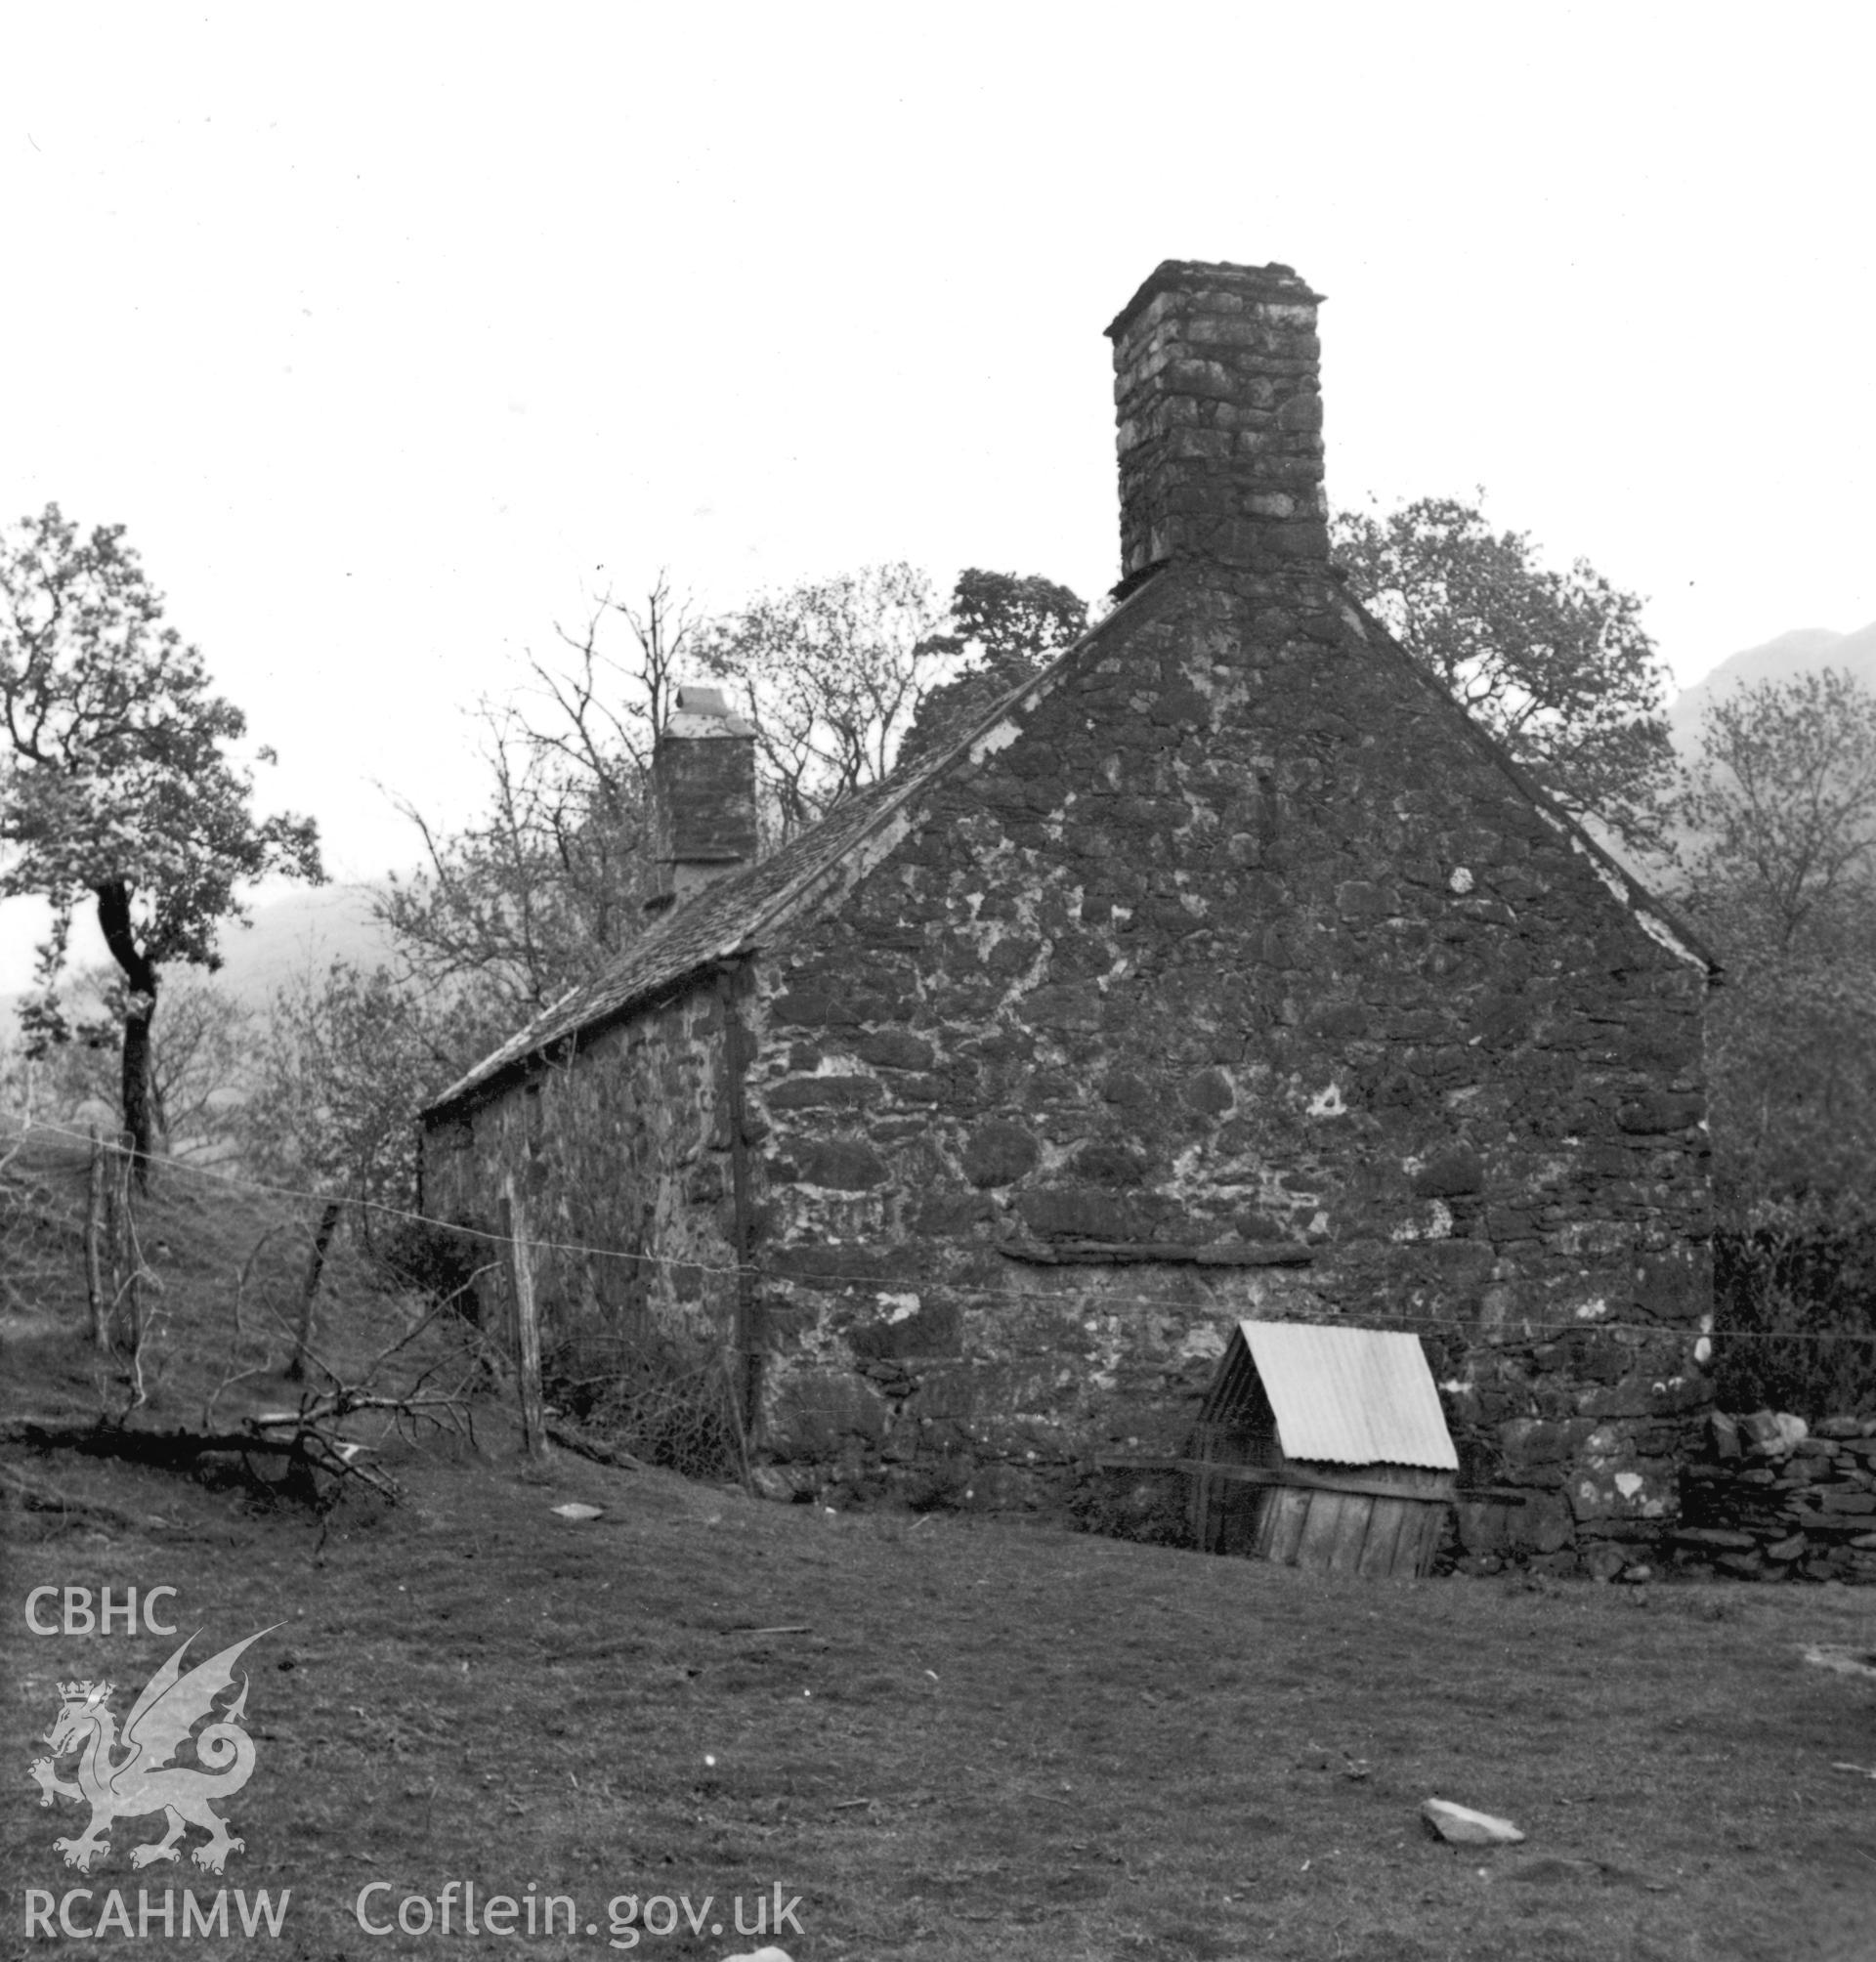 View of the gable end of Hafod Llwfog, Beddgelert.